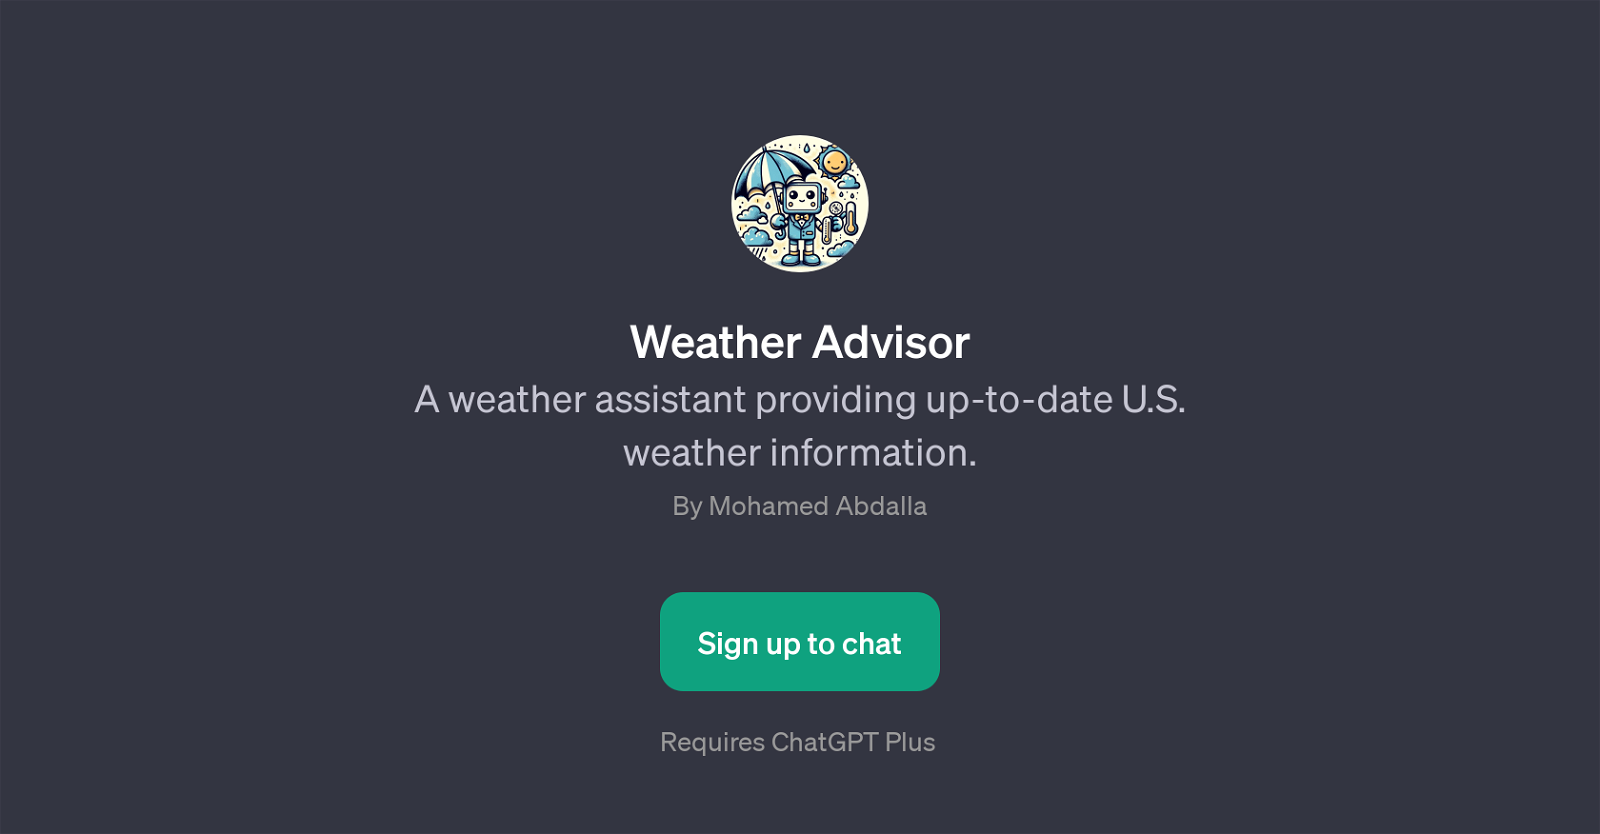 Weather Advisor website